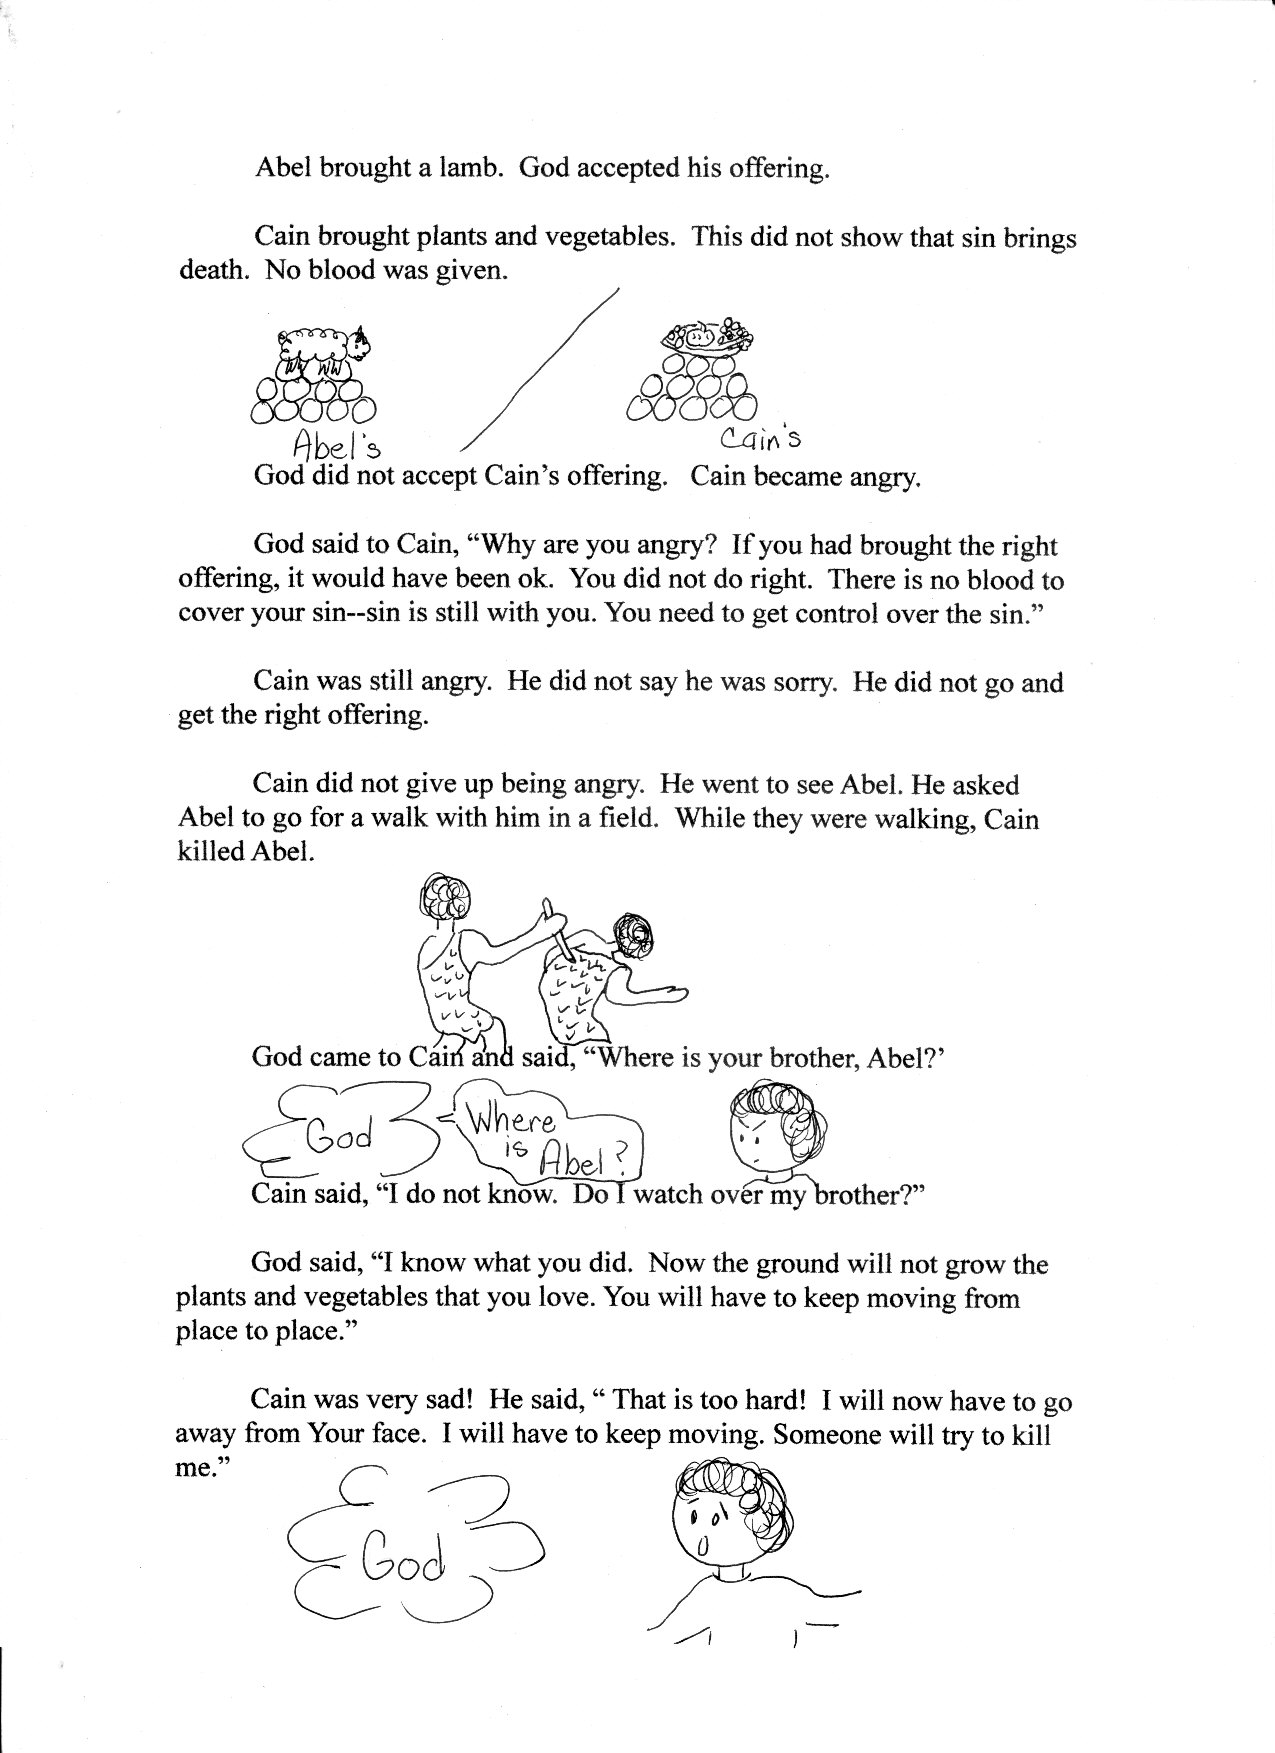 Bible Study Lesson Worksheet Image